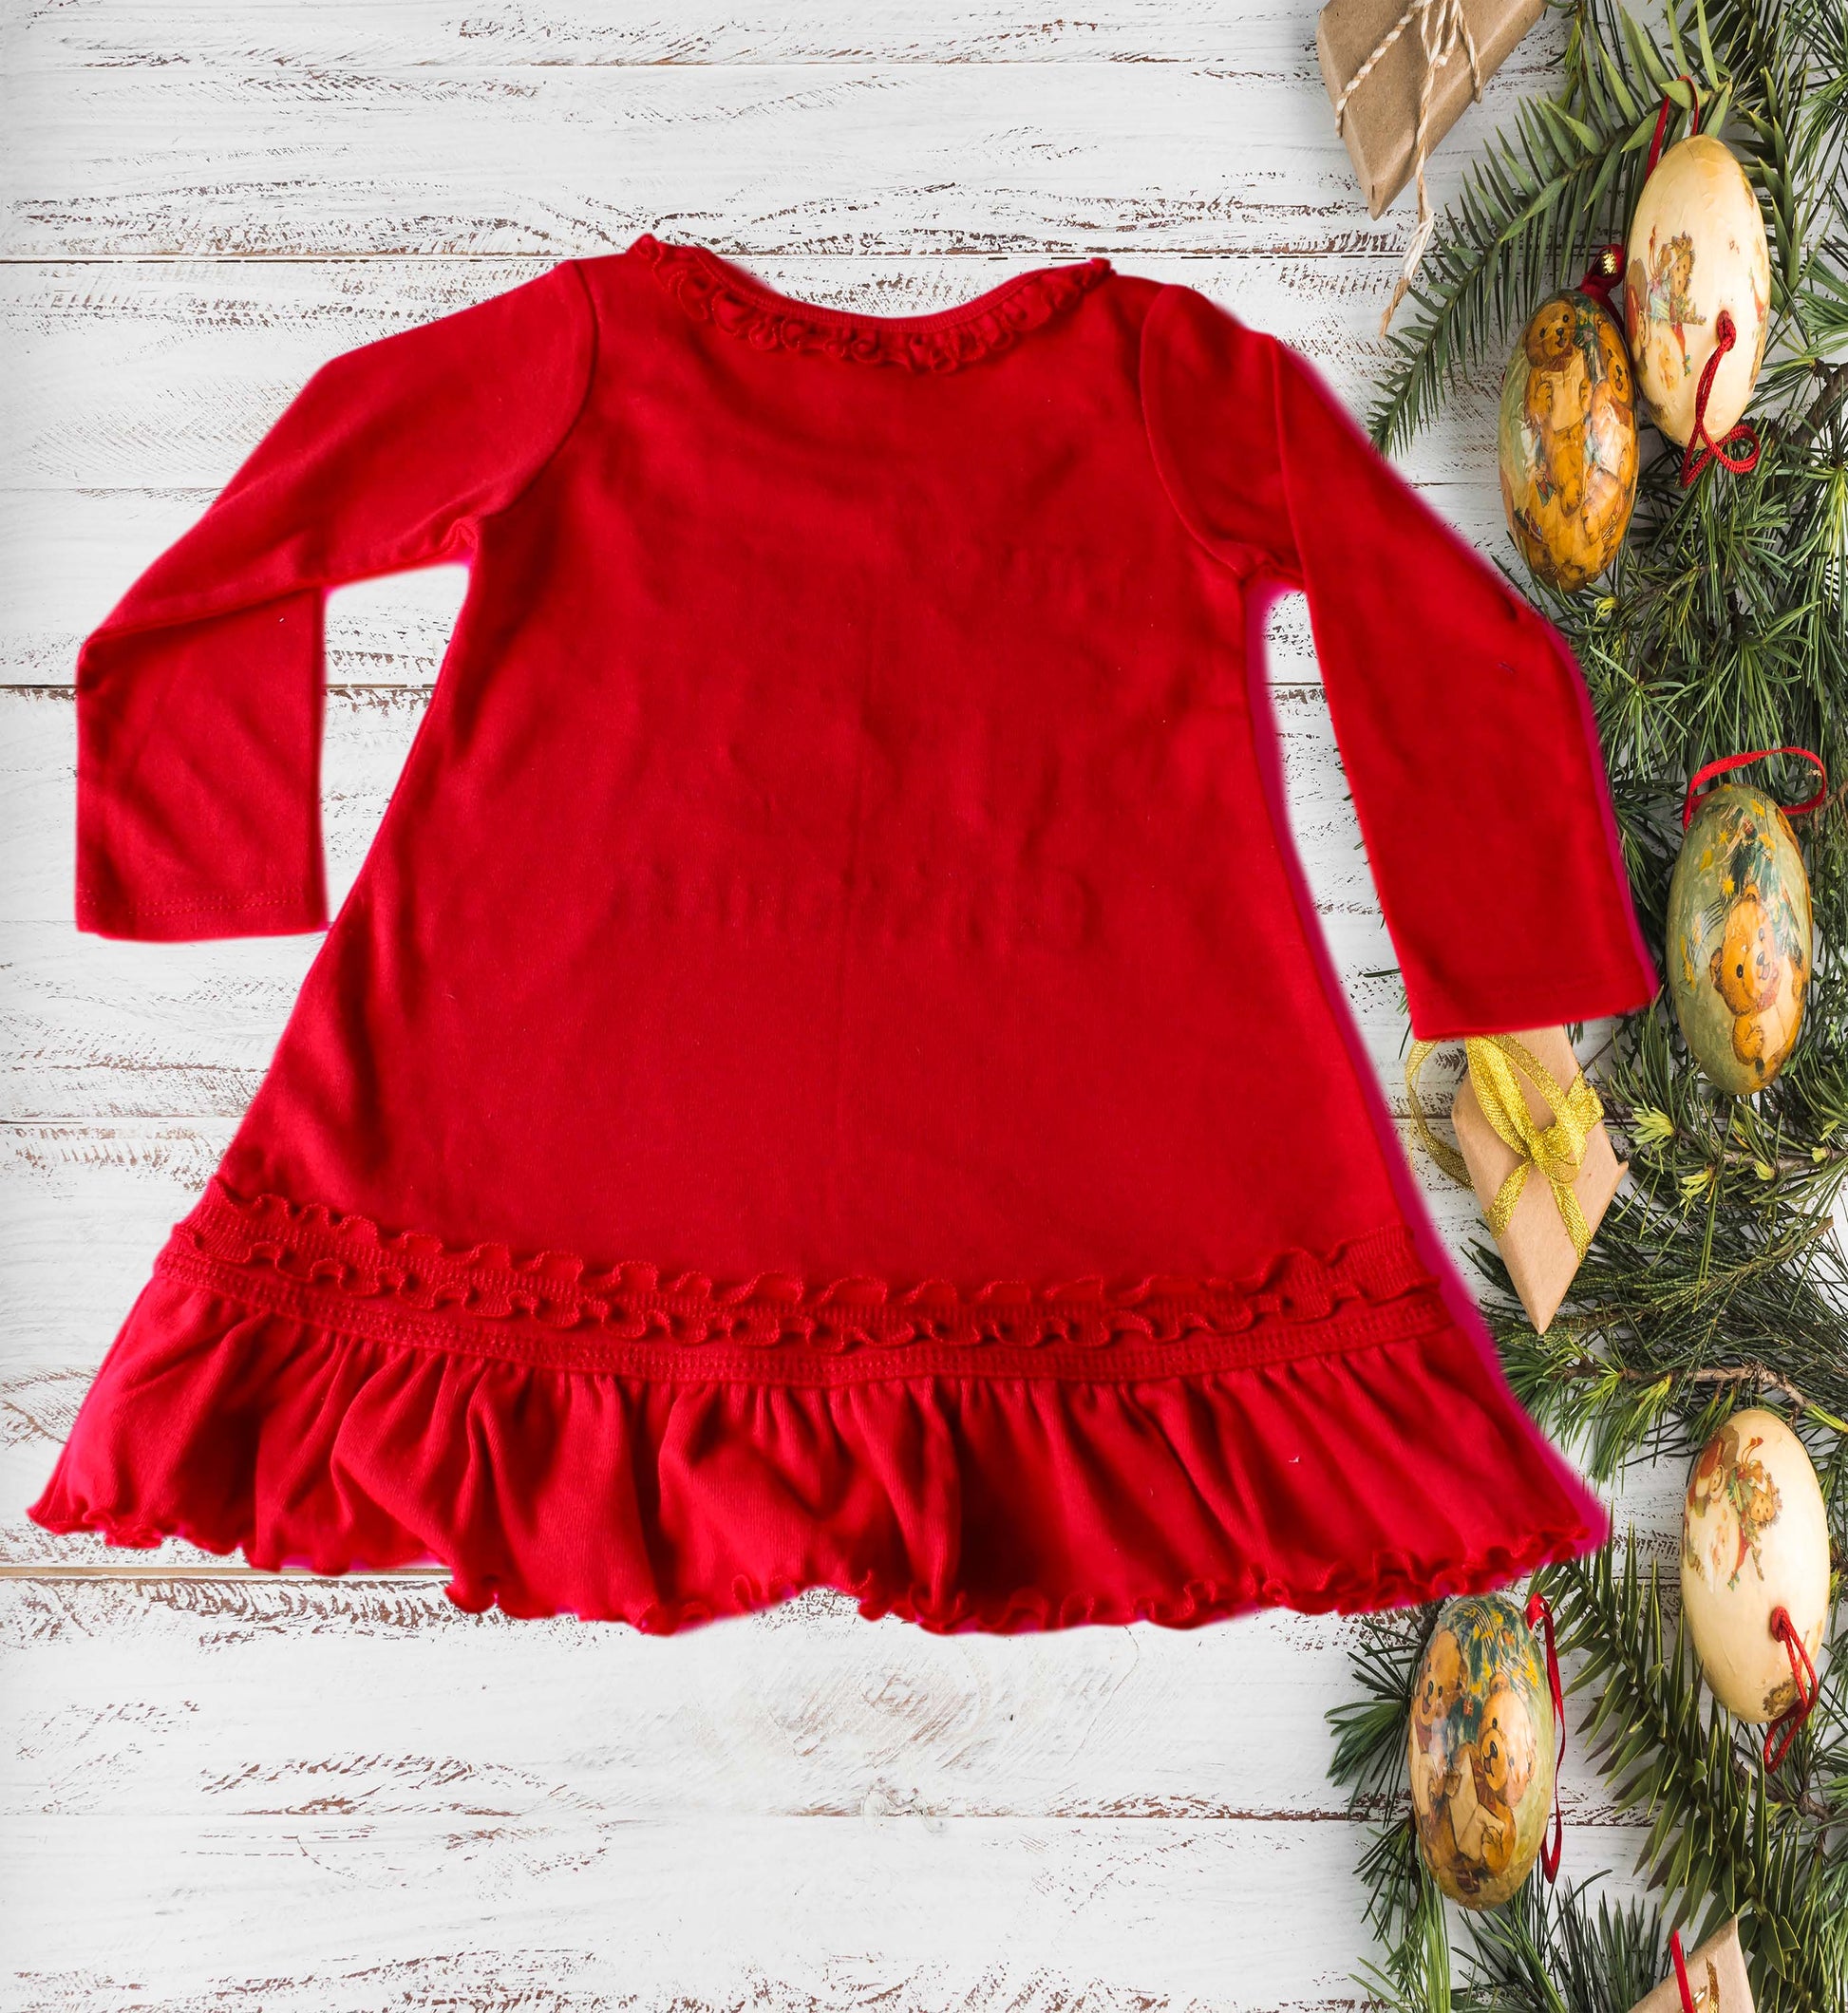 Red Christmas dress for girls